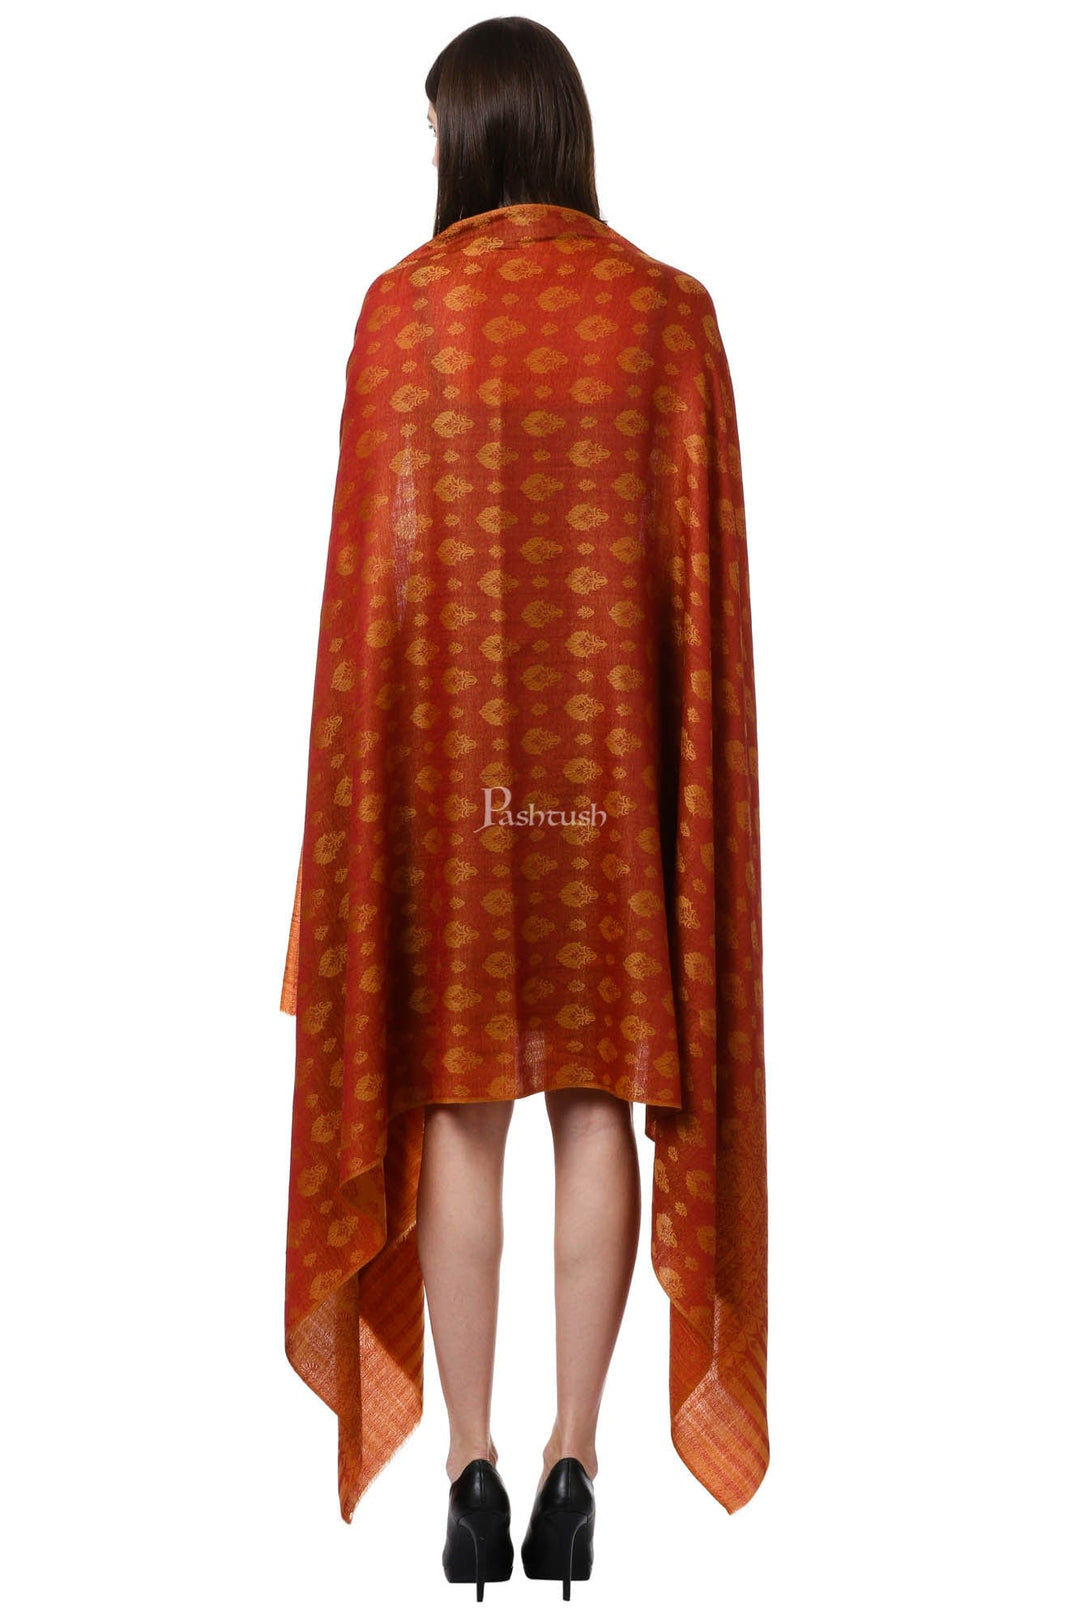 Pashtush India Womens Shawls Pashtush Womens Fine Wool Shawl, Apricot